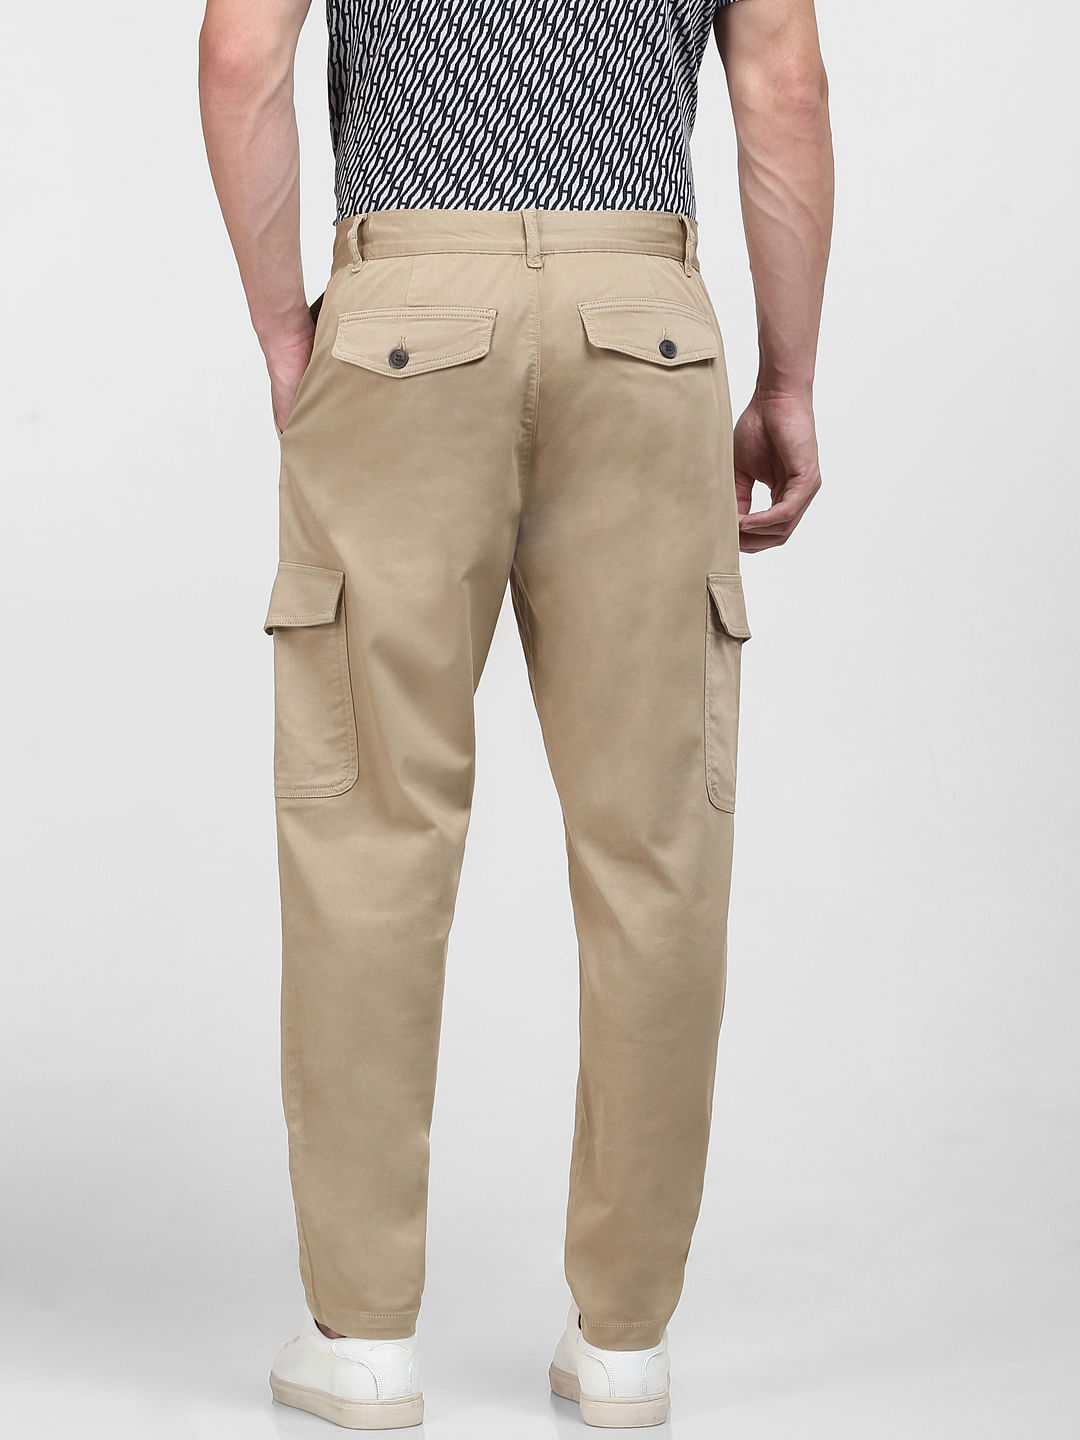 Fabindia Men Trousers - Buy Fabindia Men Trousers online in India